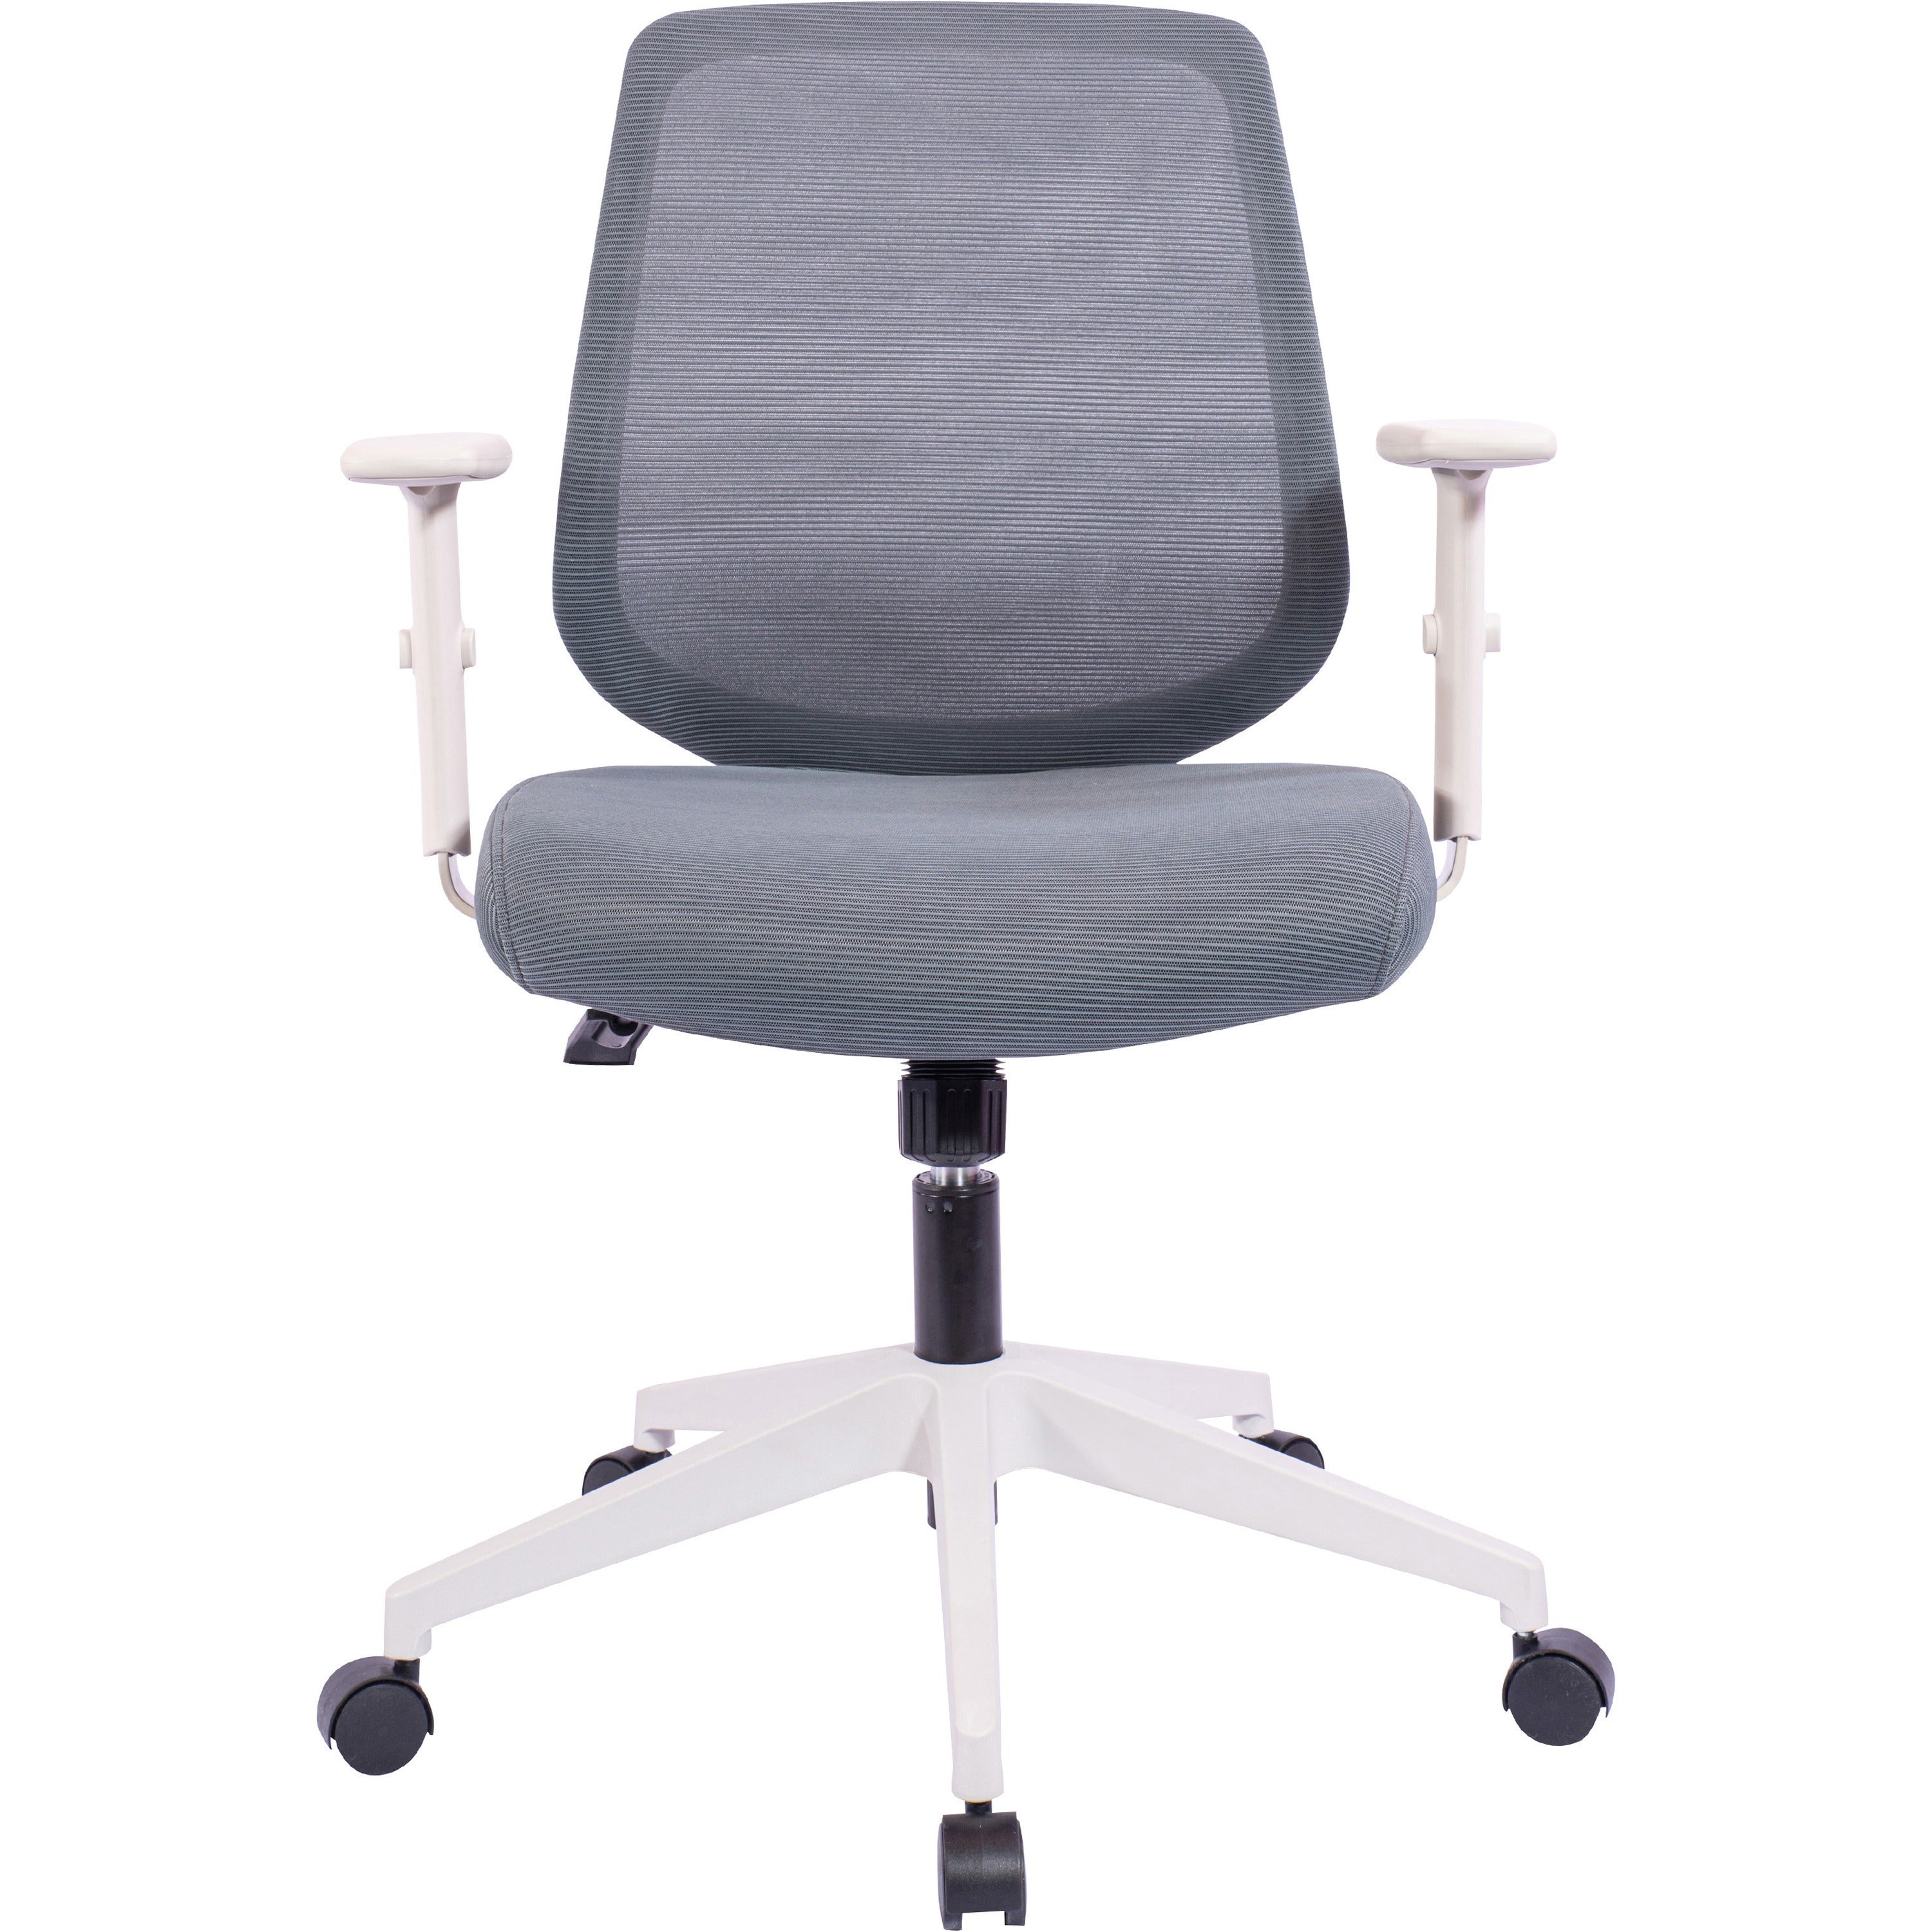 nusparc-mid-back-task-chair-fabric-back-mid-back-5-star-base-gray-armrest-1-each_nprch201magy - 3